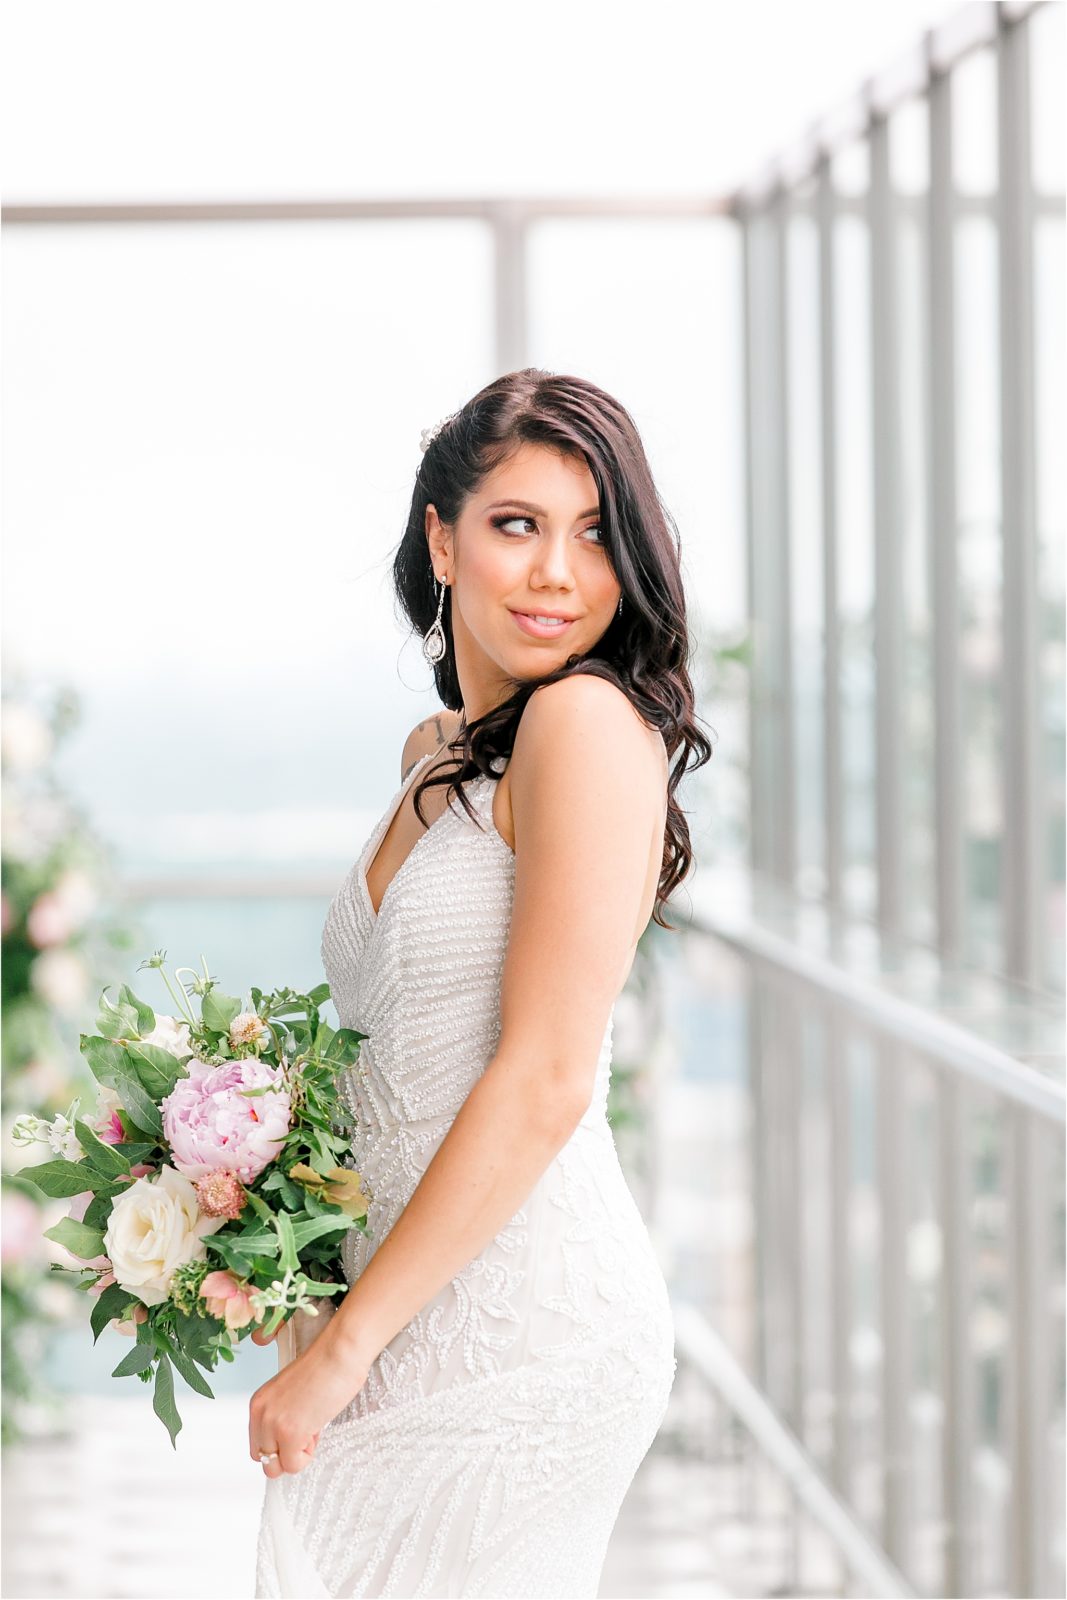 Bridal Session Ideas by Dallas, Texas Wedding Photographer Jillian Hogan 